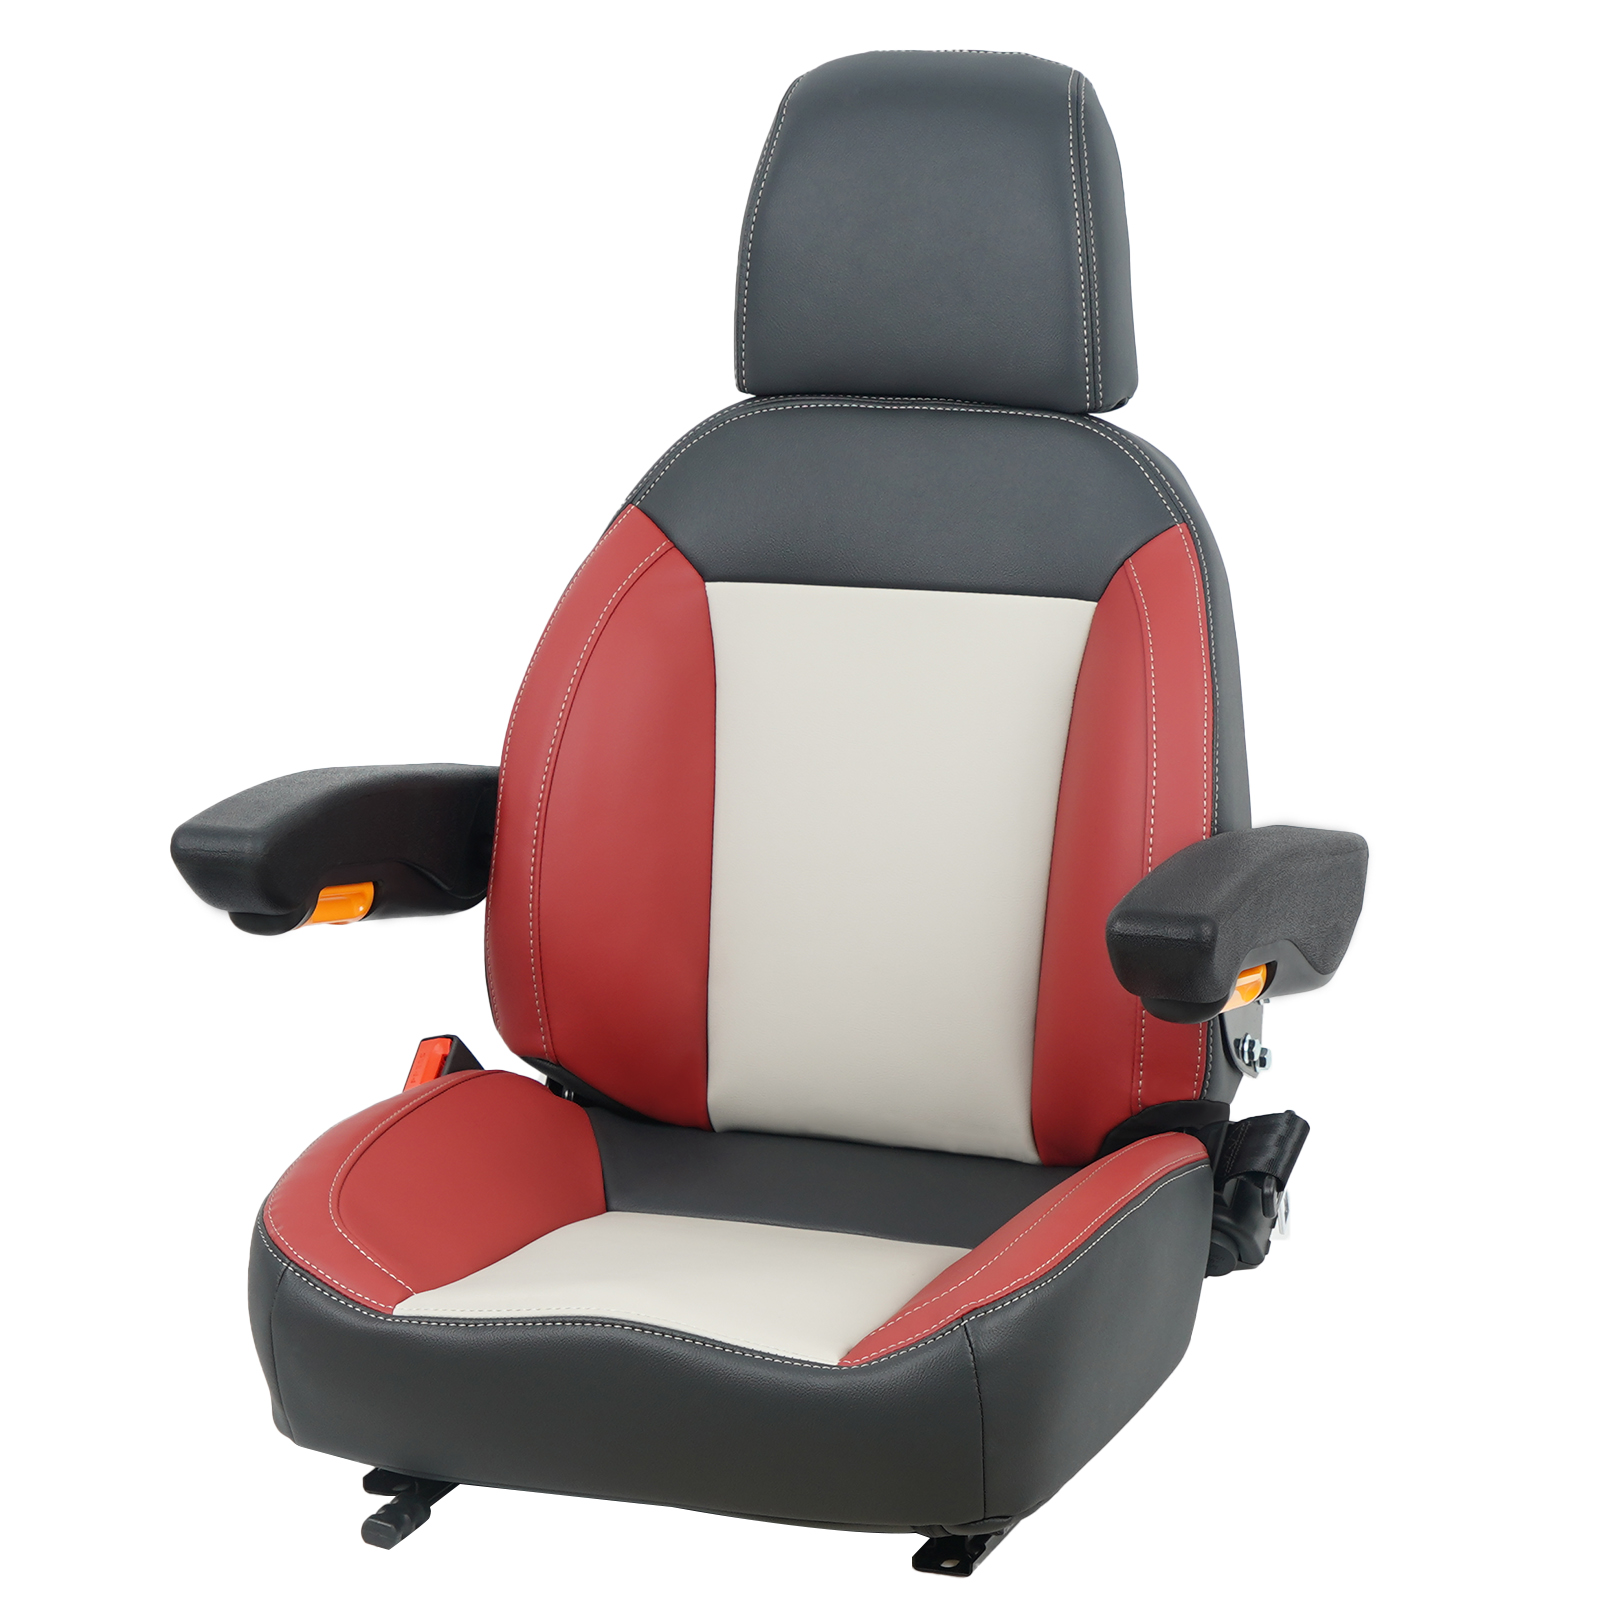 लाल और ब्लैक गार्डन ट्रैक्टर सीट रिप्लेसमेंट, जीरो टर्न राइडिंग मोवर सीट